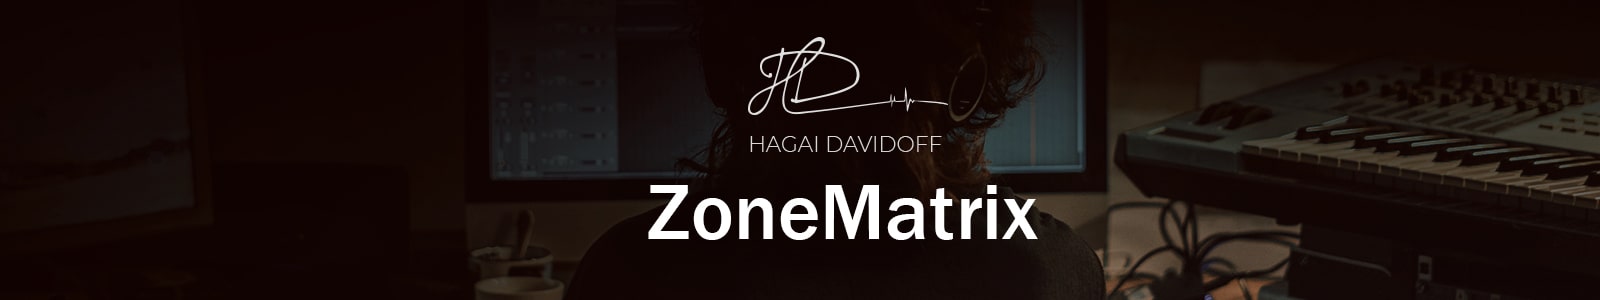 ZoneMatrix by HD Instruments